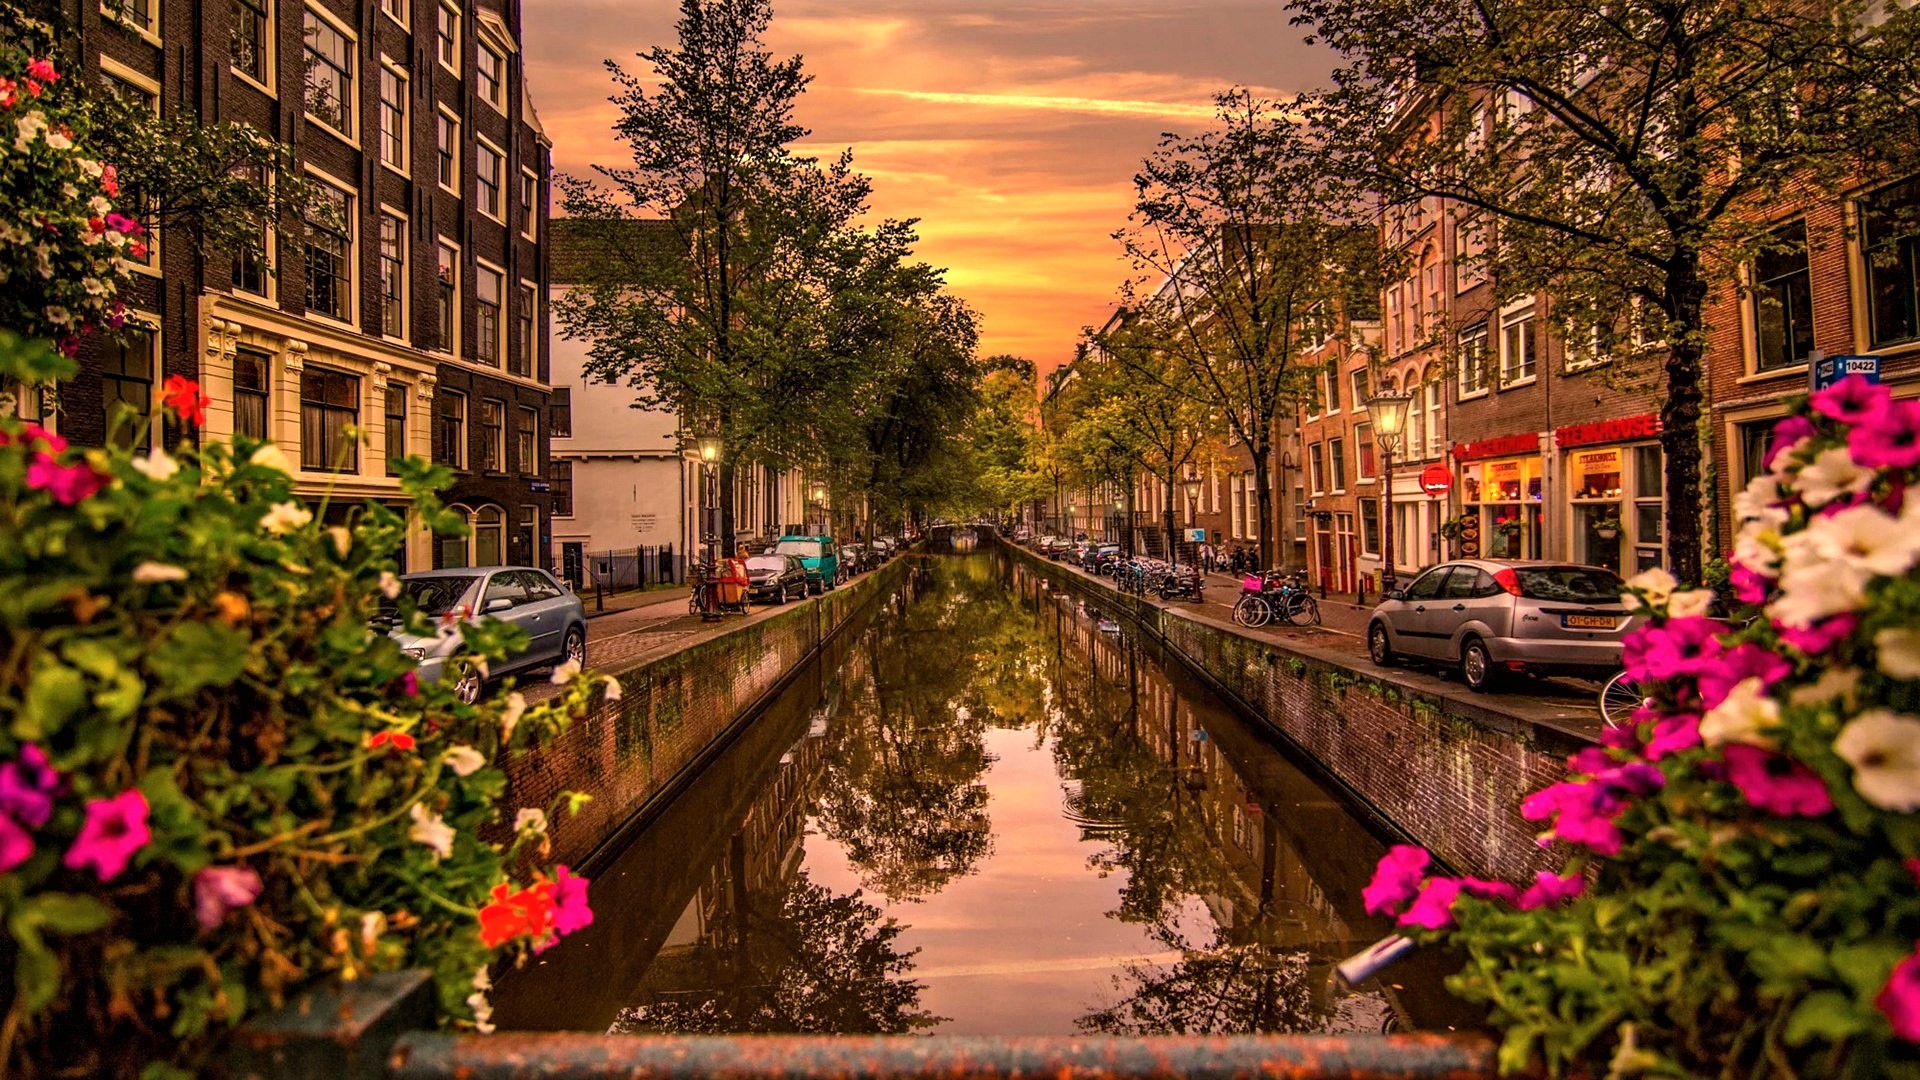 Man Made Amsterdam HD Wallpaper | Background Image